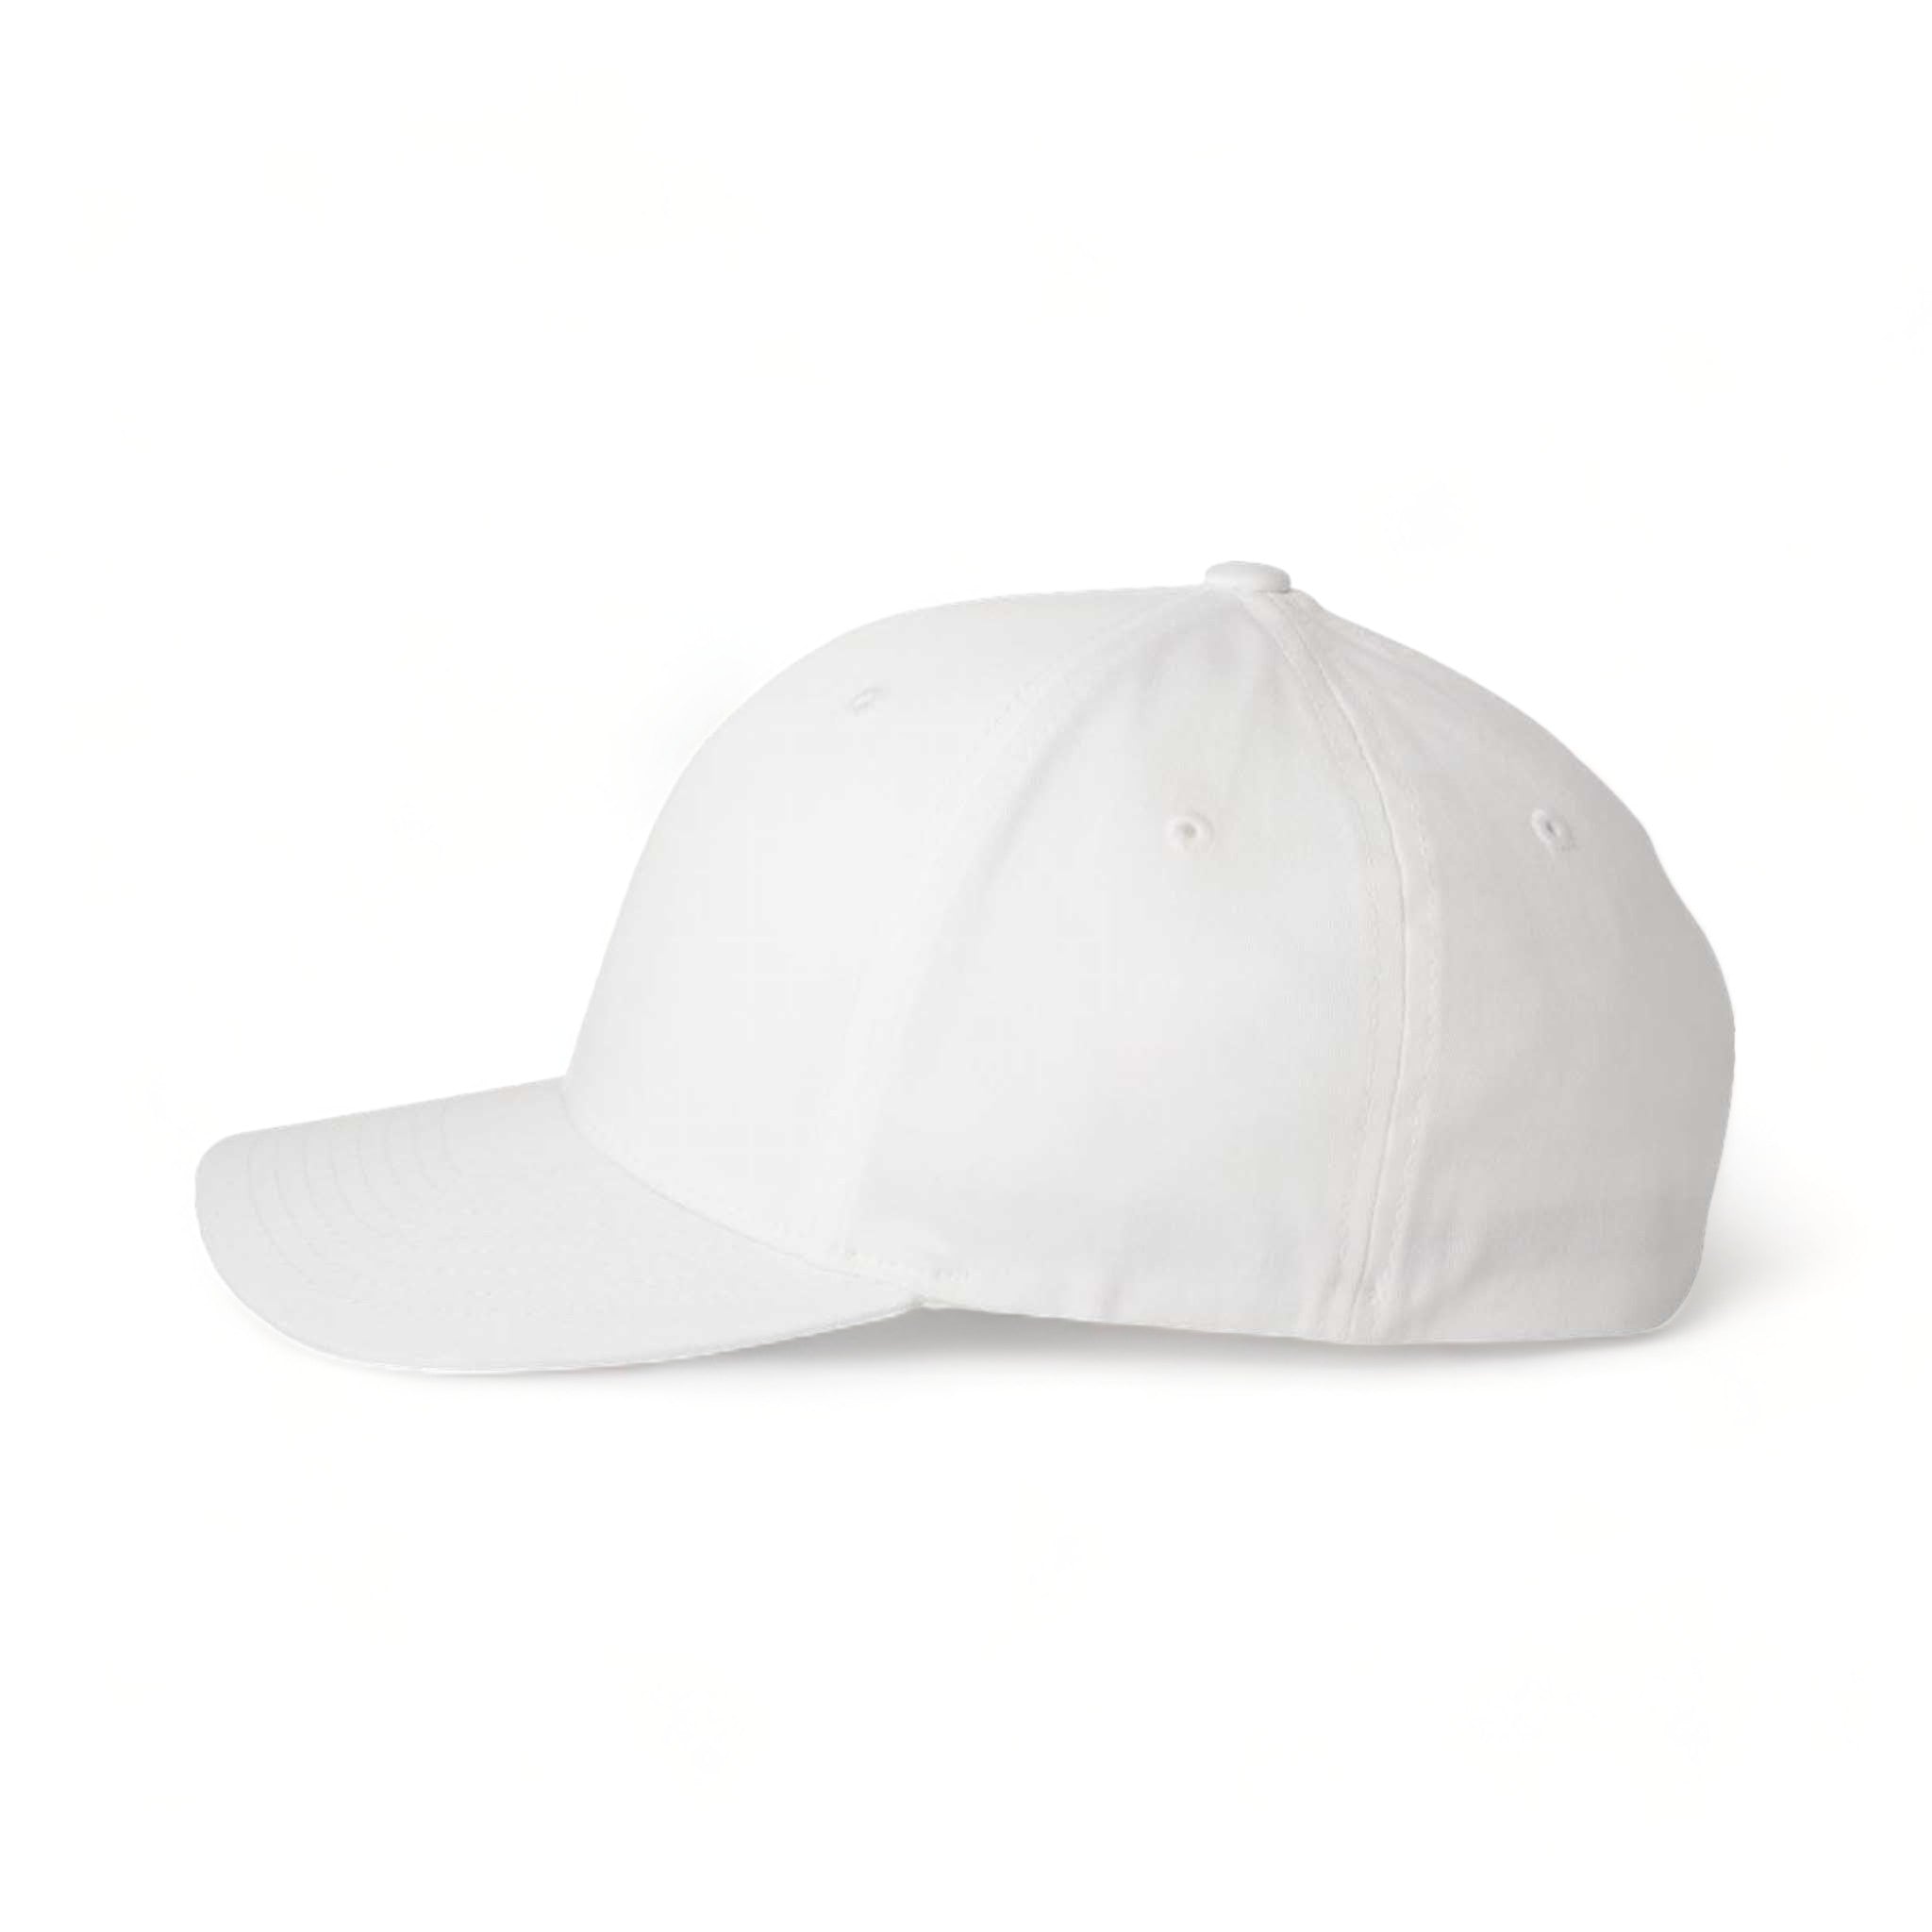 Side view of Flexfit 5001 custom hat in white